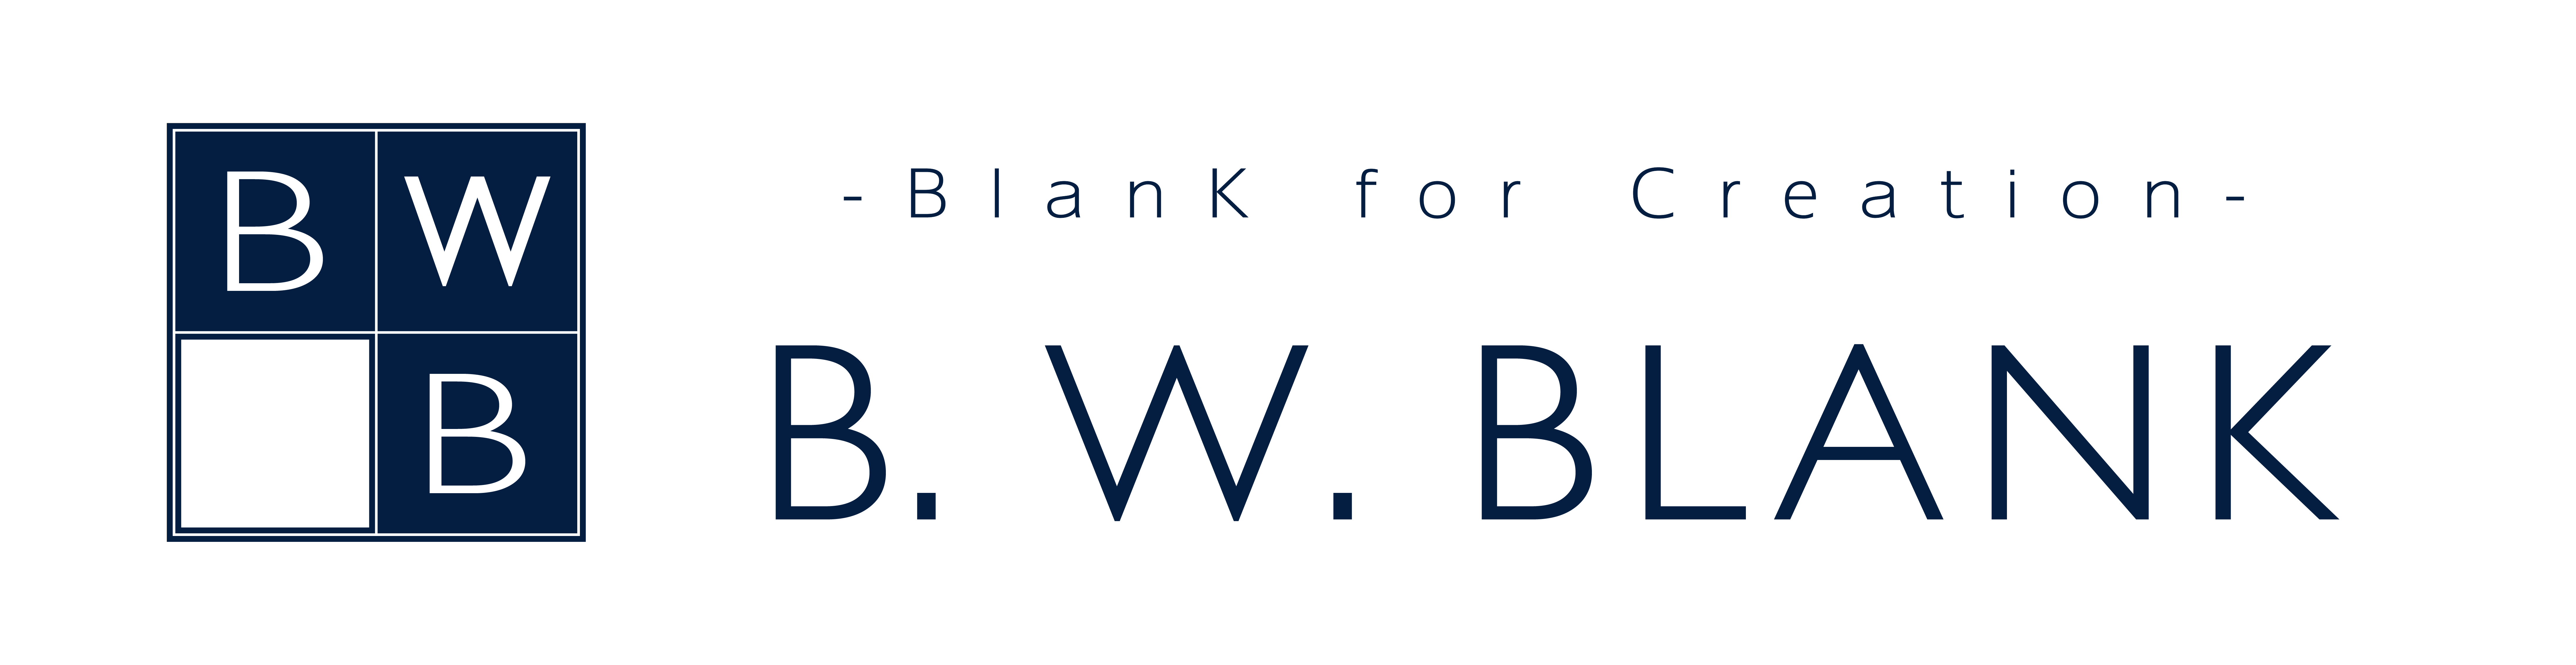 B.W. BLANK Home